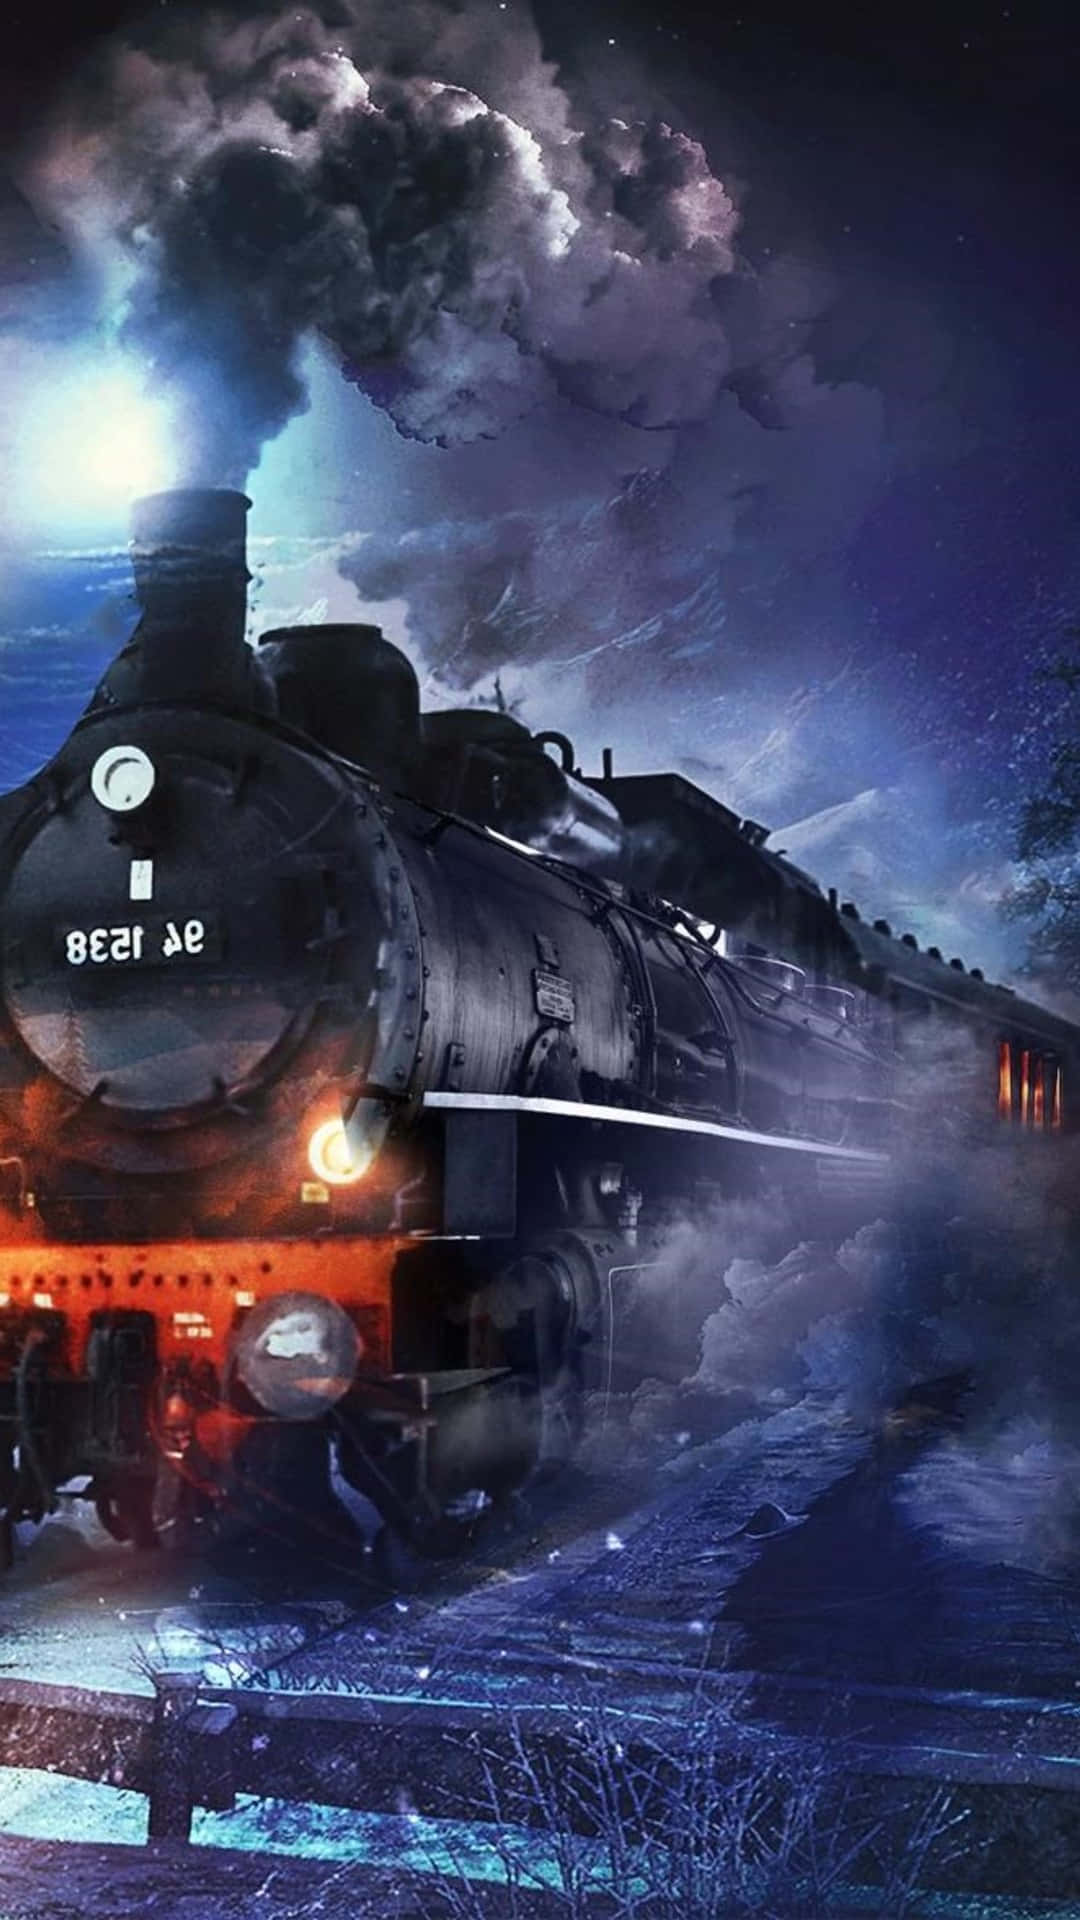 Hogwarts Express: The Magical Journey Begins Wallpaper